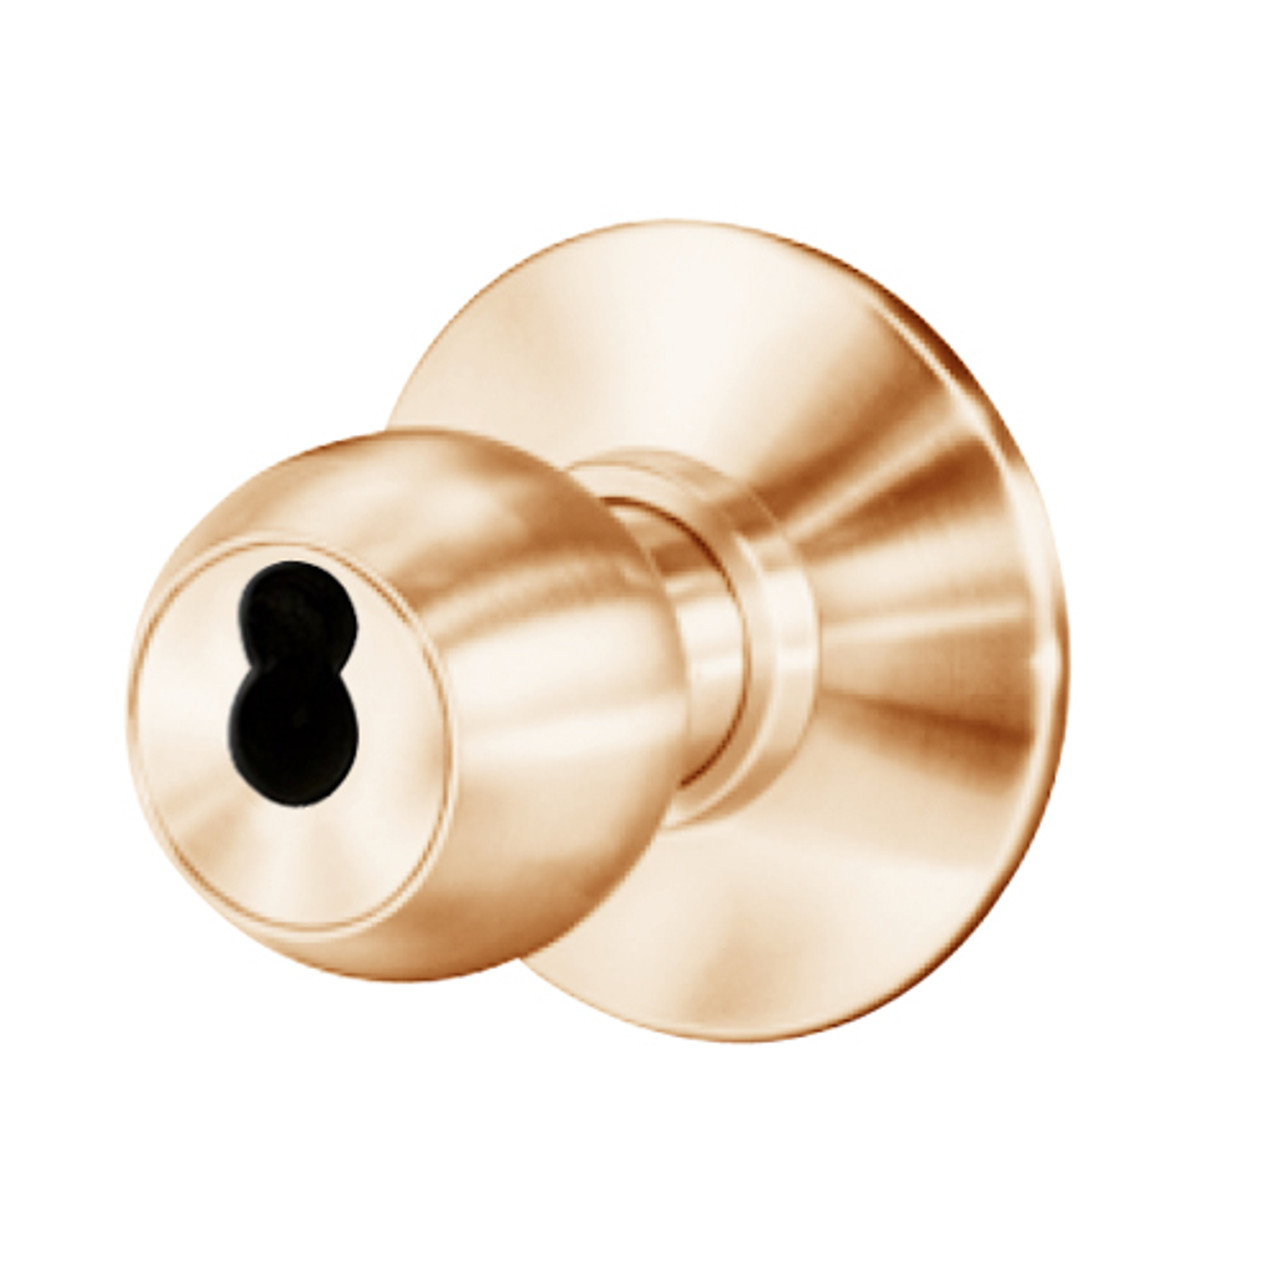 8K37DZ4DS3611 Best 8K Series Closet or Storeroom Heavy Duty Cylindrical Knob Locks with Round Style in Bright Bronze